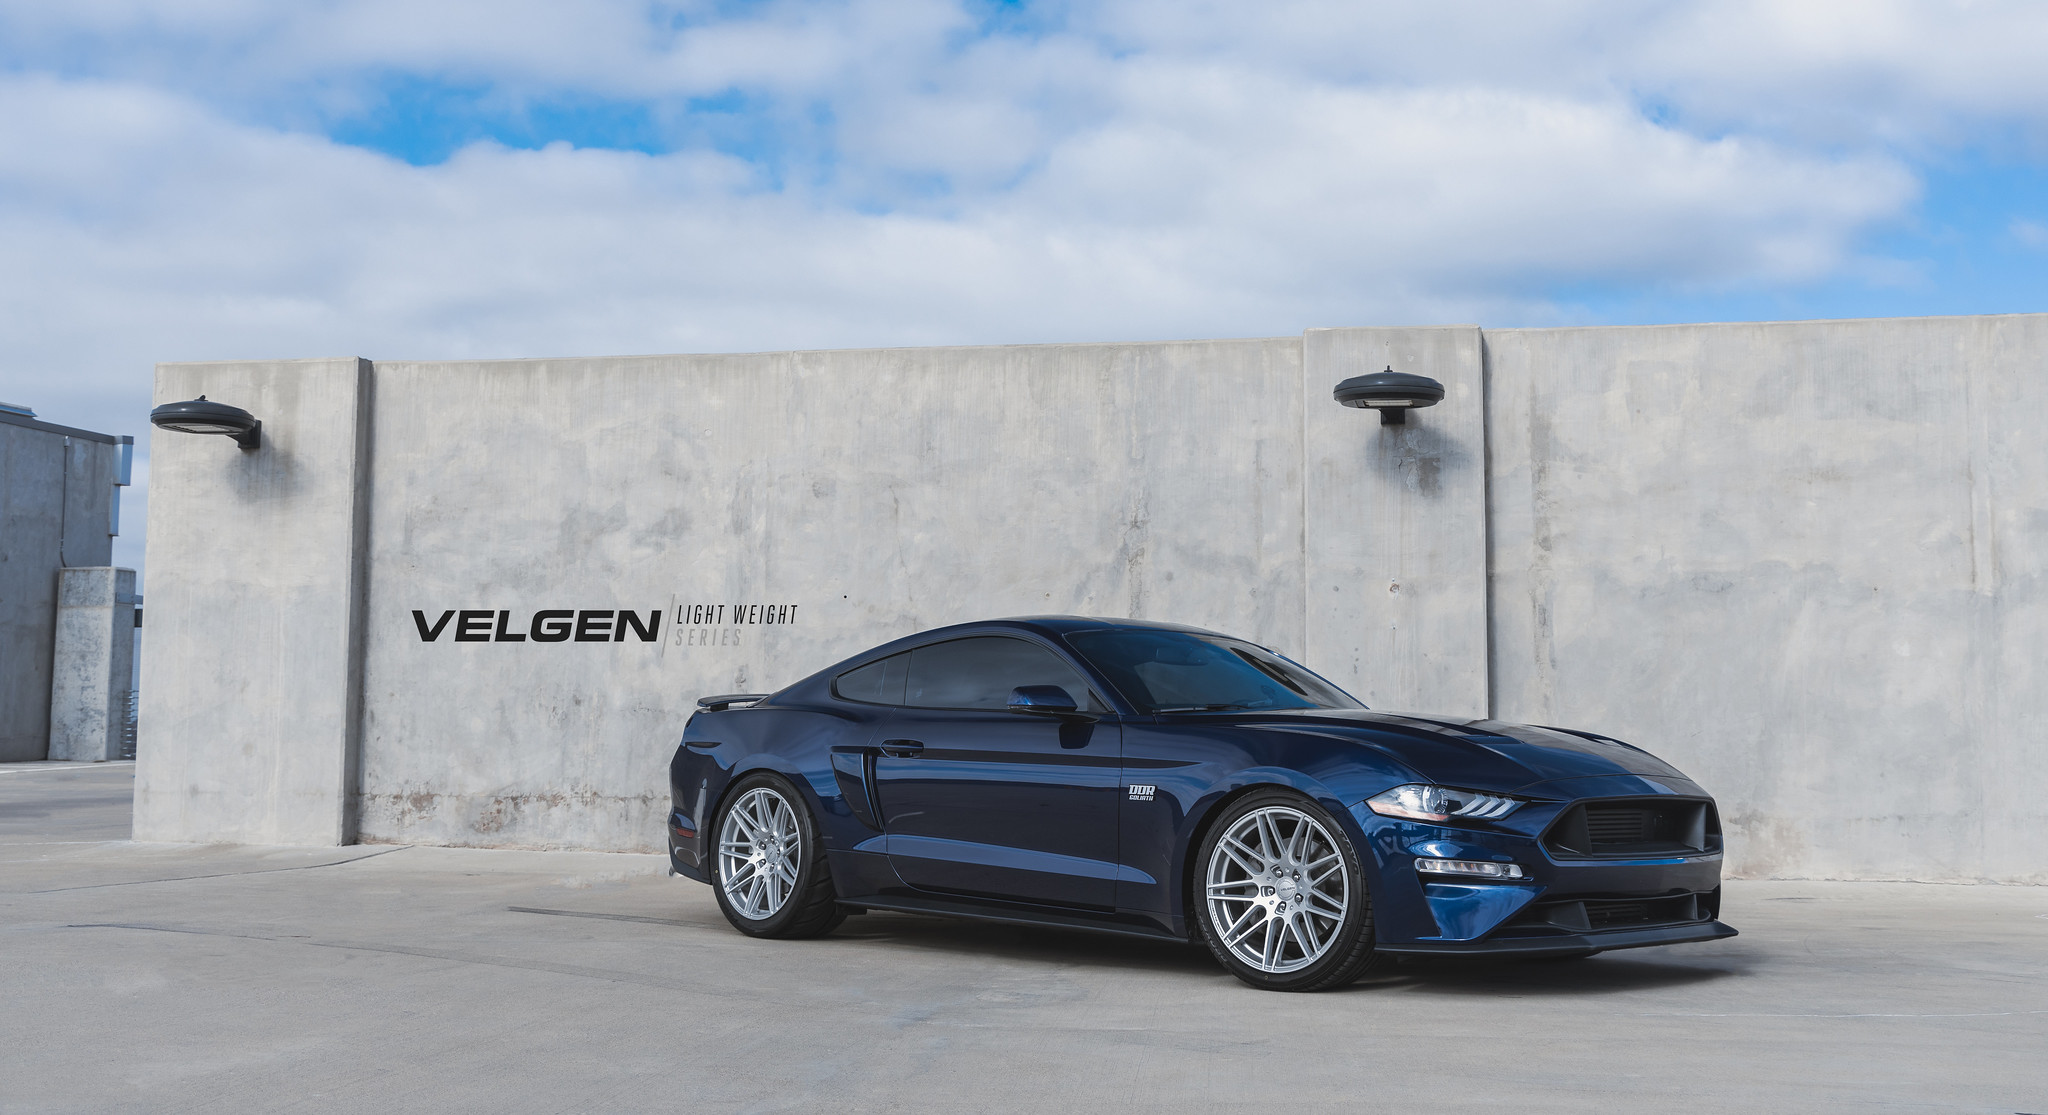 S650 Mustang Velgen wheels for your S650 Mustang | Vibe Motorsports 50863061833_63ebeb4197_k